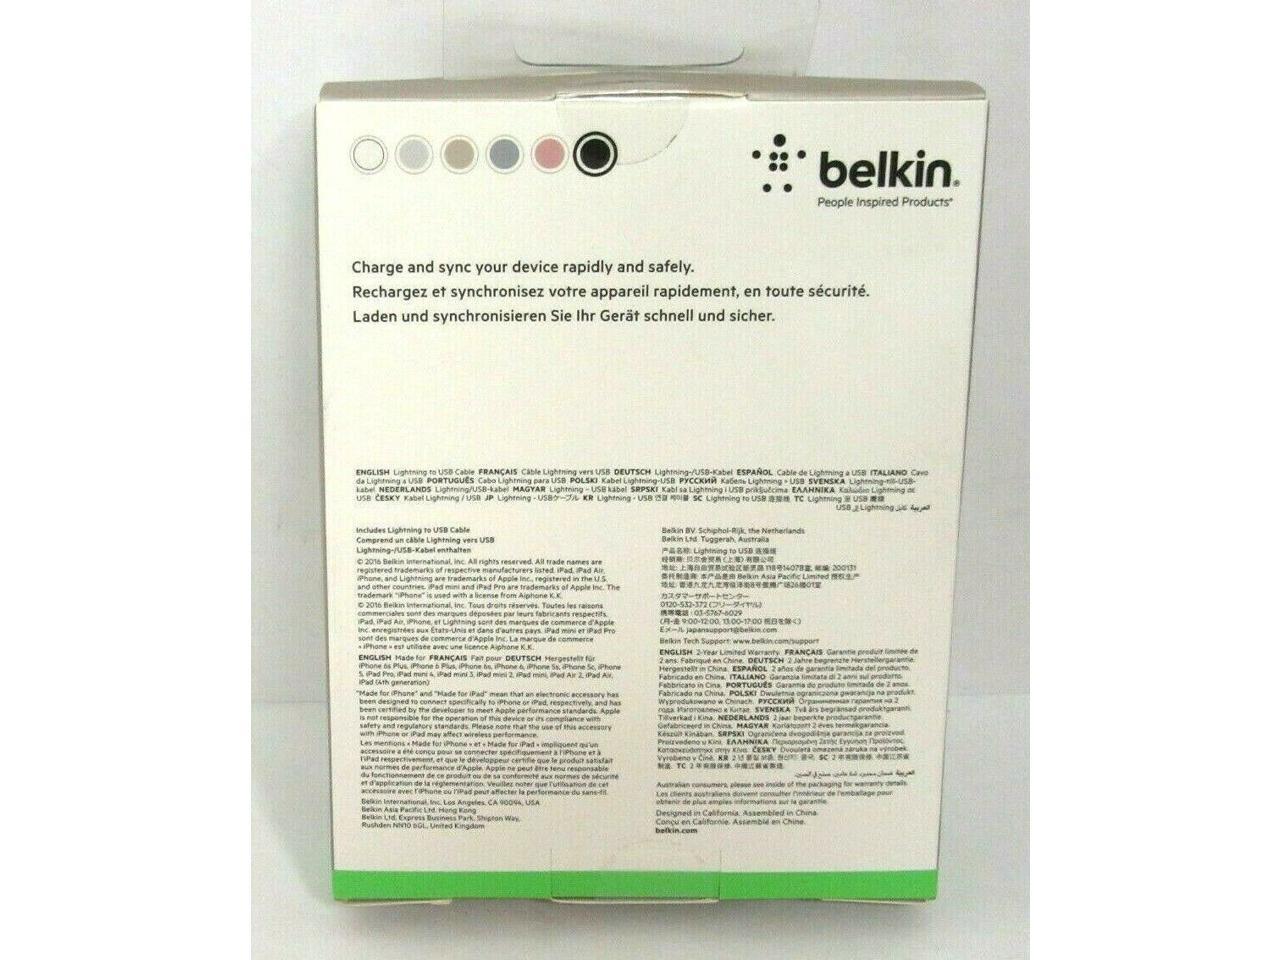 Belkin Metallic Lightning to USB A Cable Black (4ft) F8J144BT04-BLK